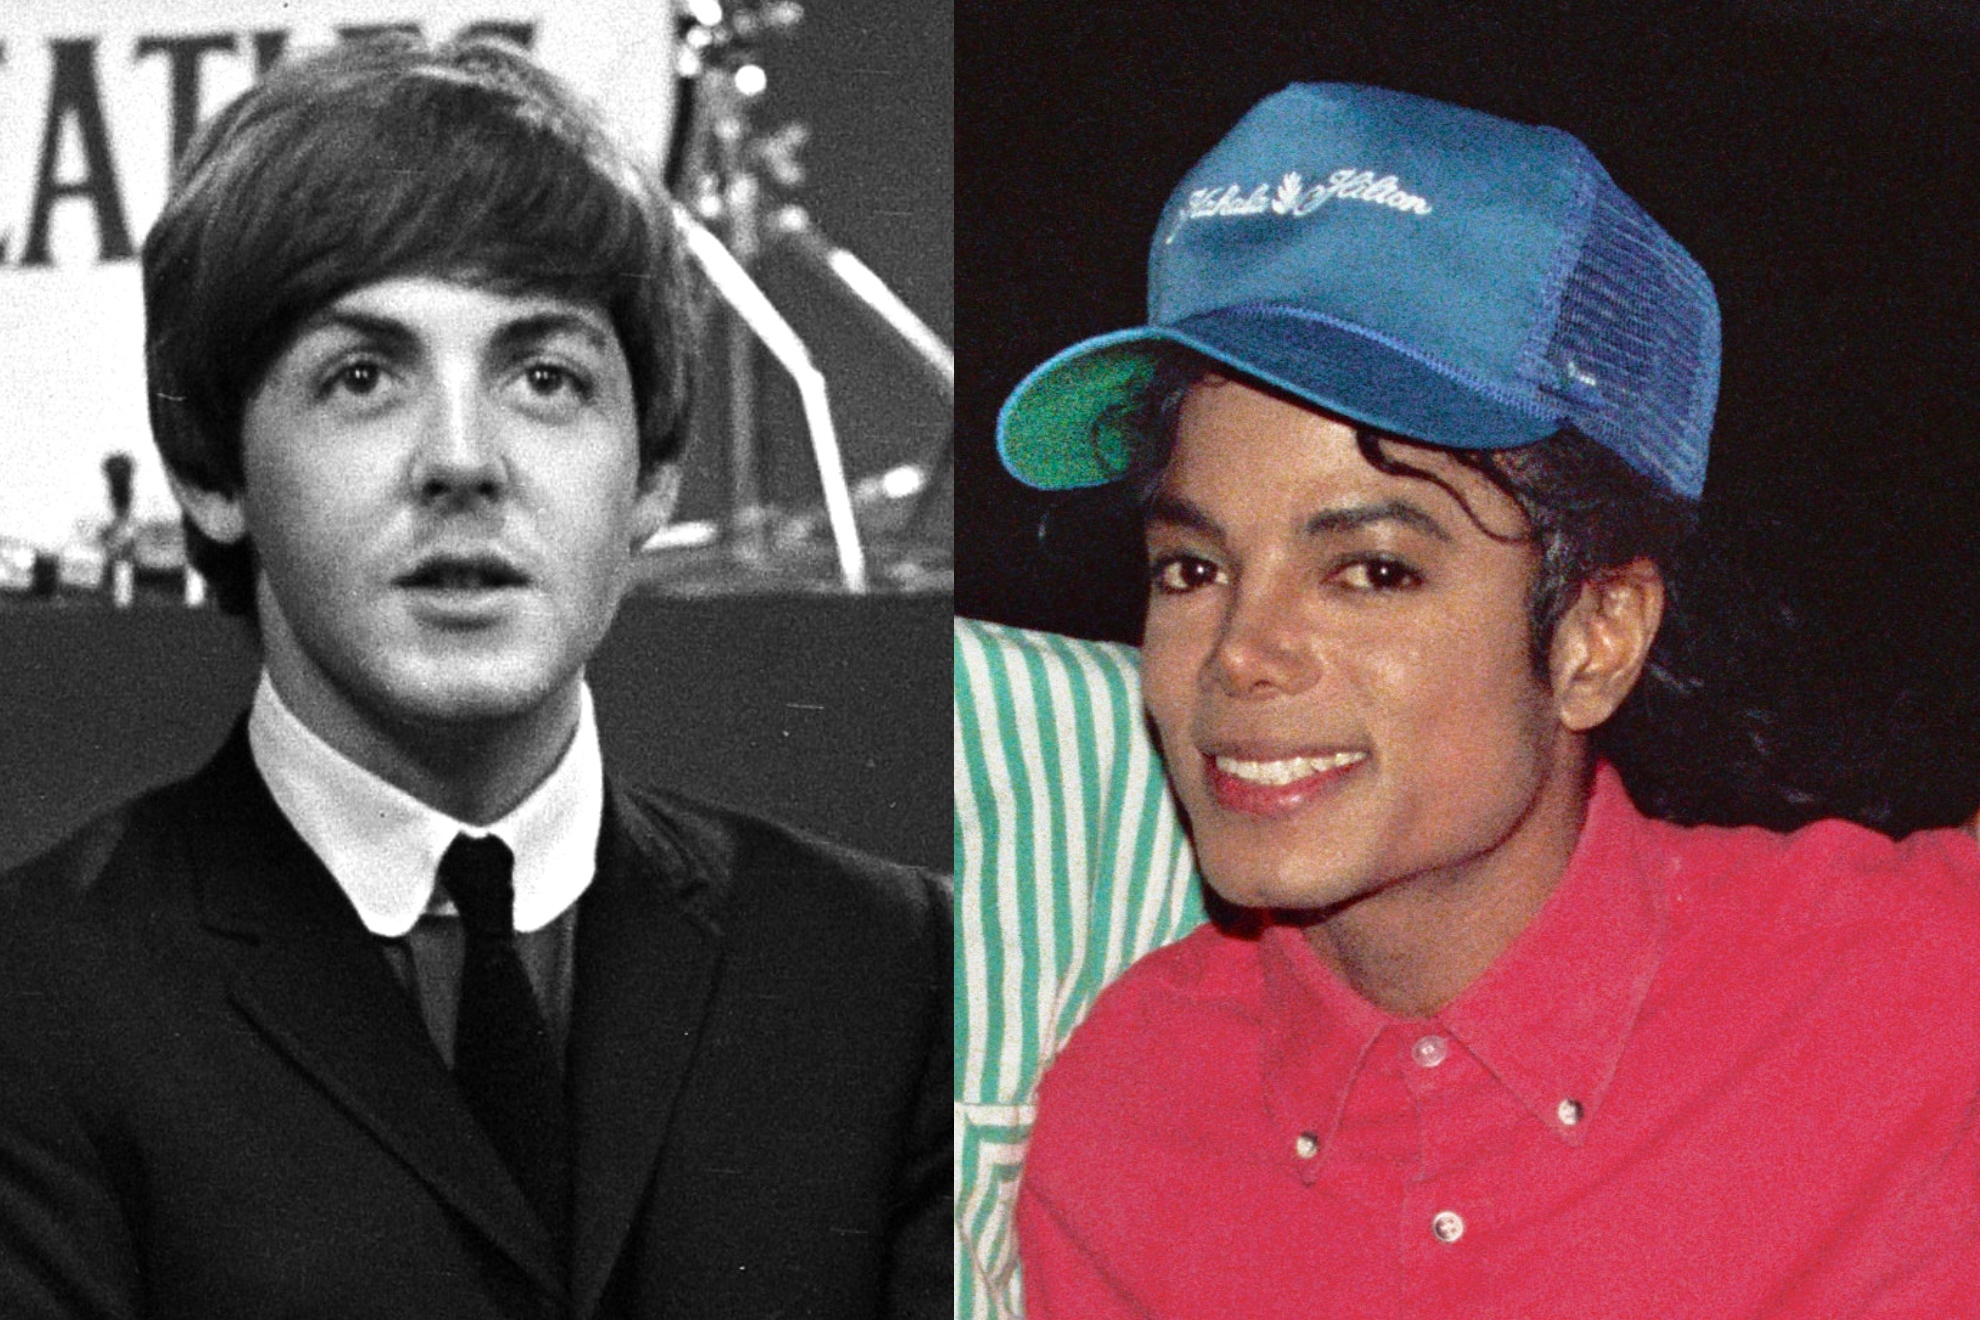 Paul McCartney and Michael Jackson